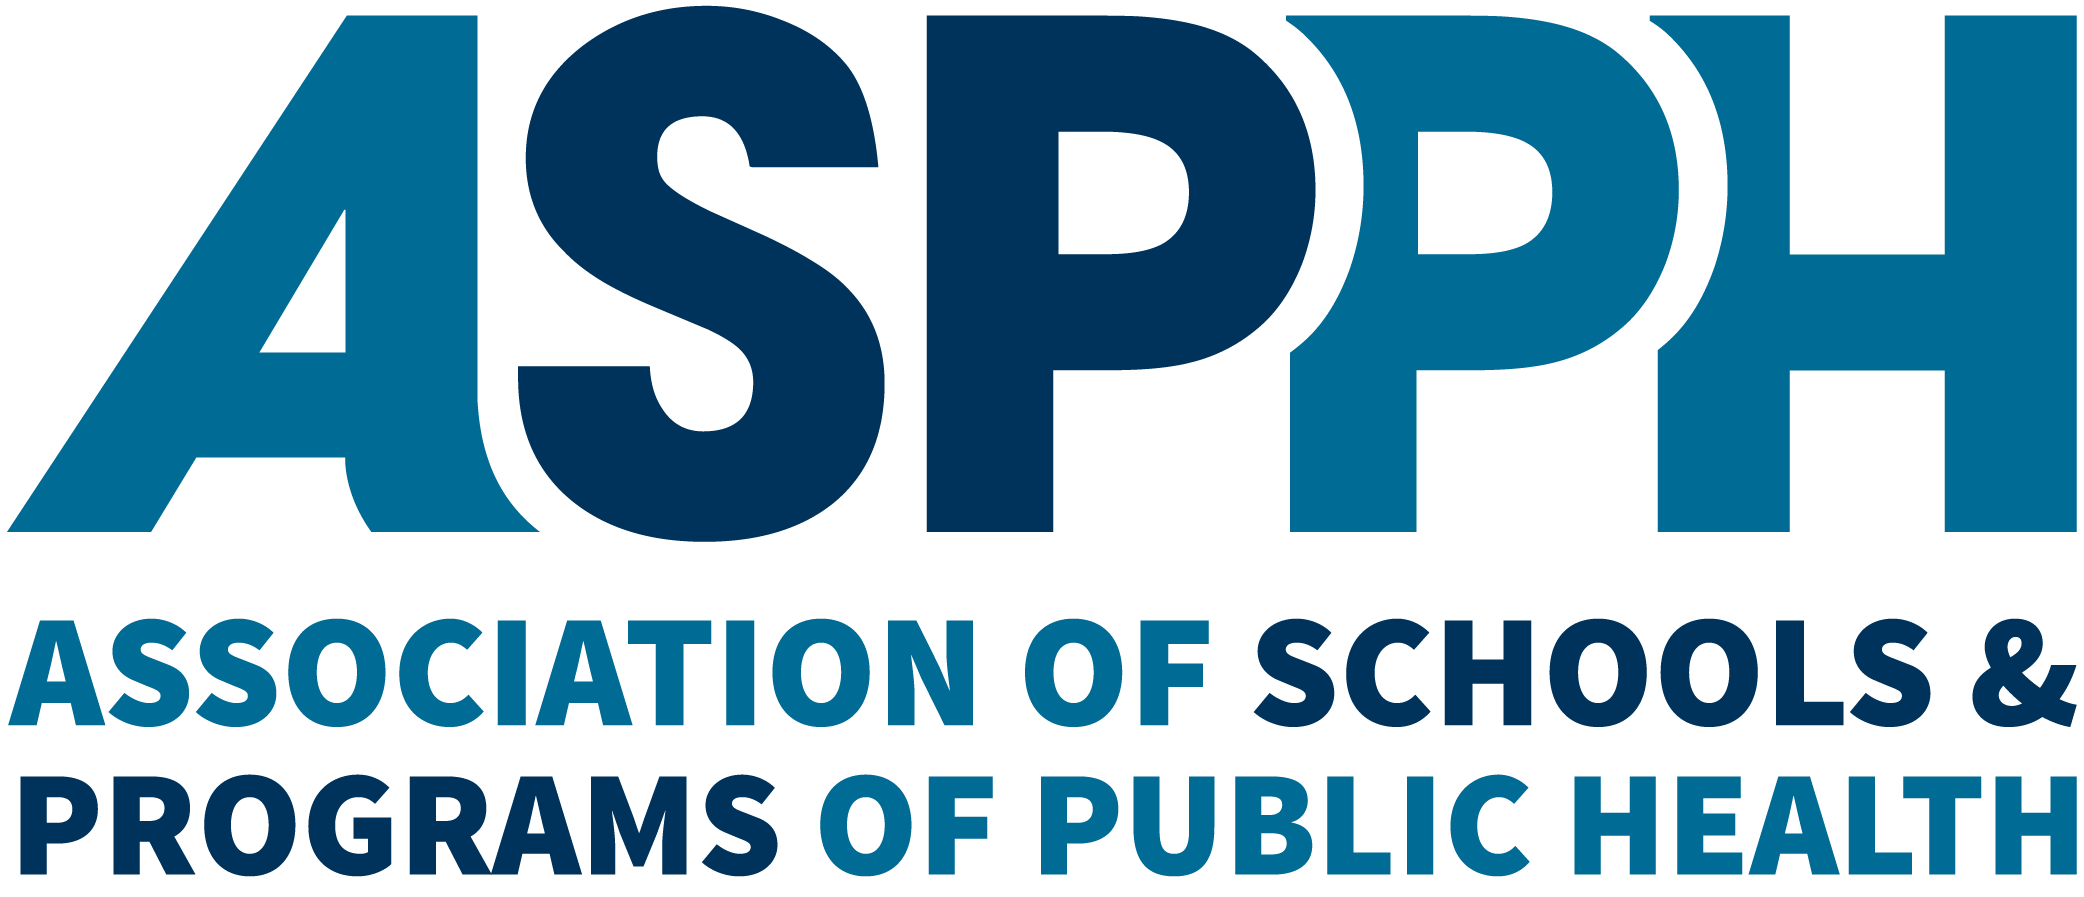 Association of Schools and Programs of Public Health